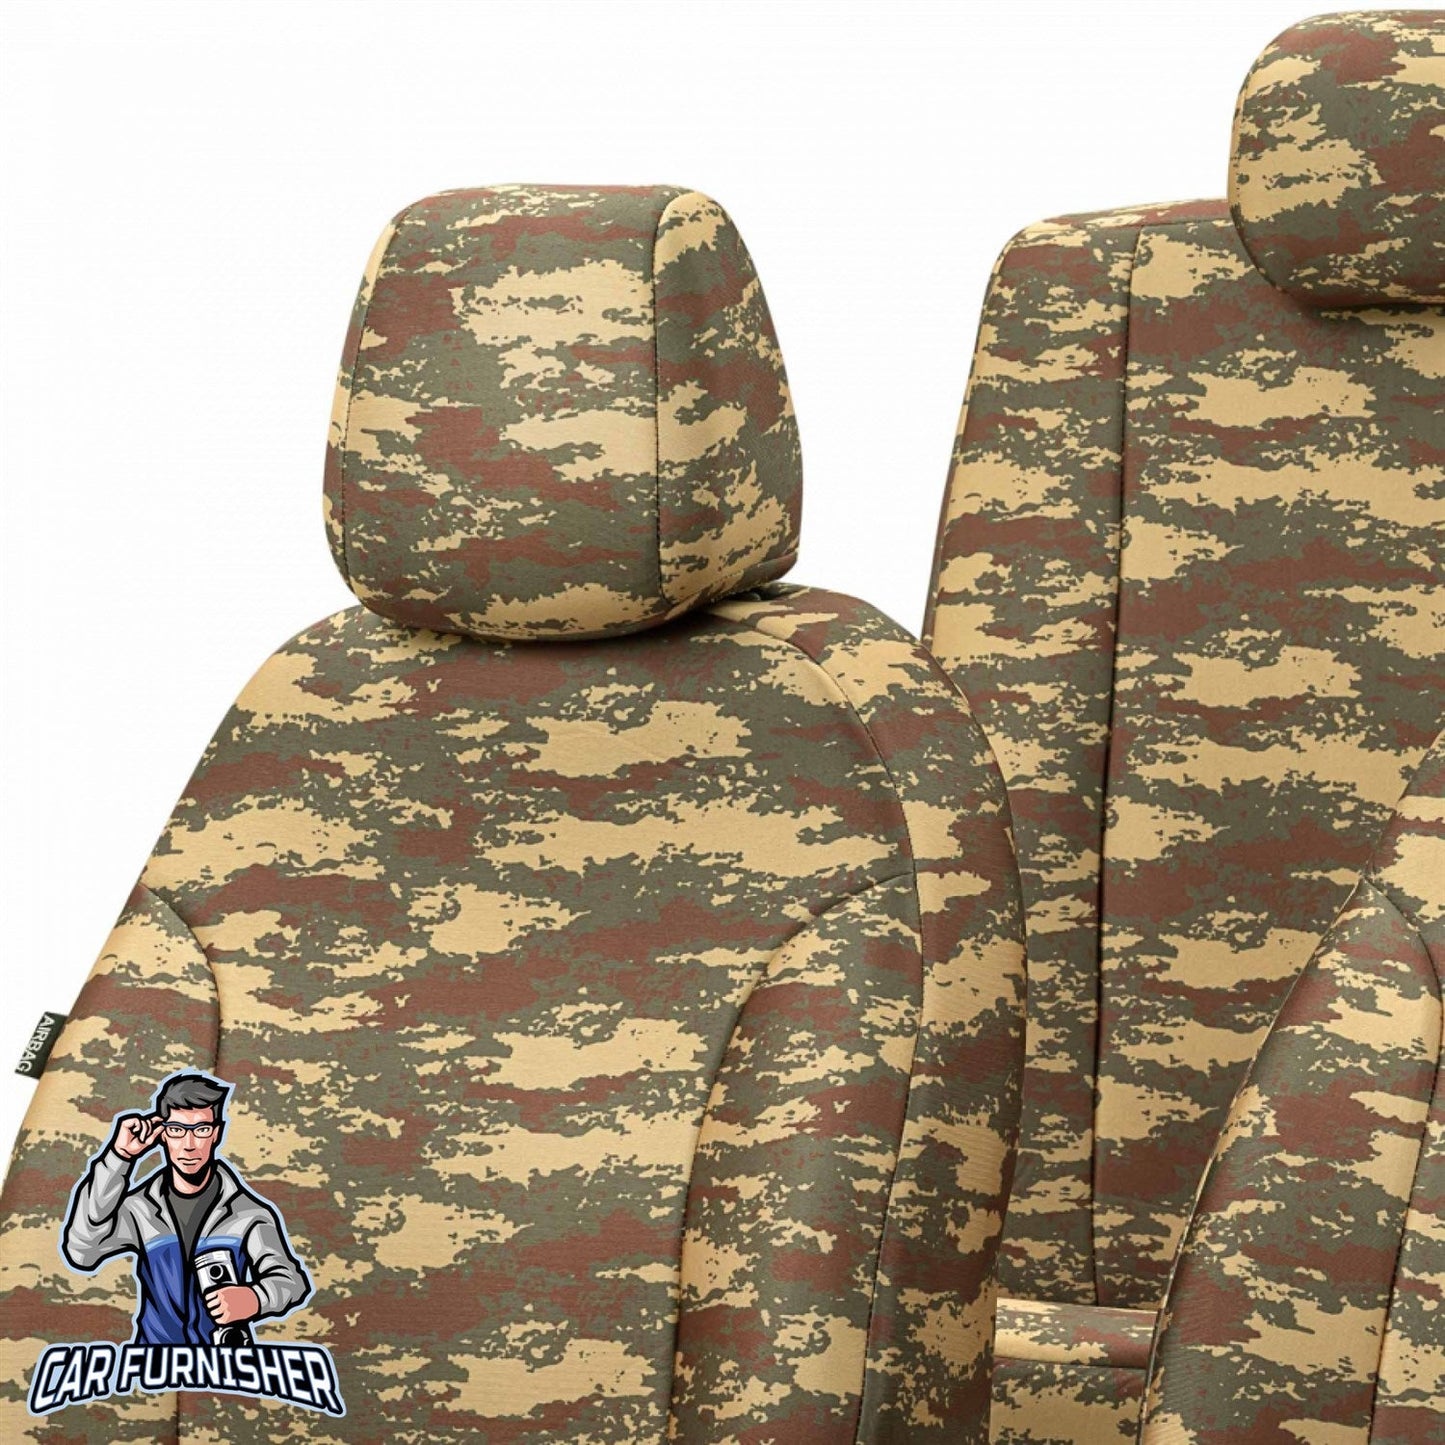 Tata Xenon Seat Covers Camouflage Waterproof Design Sierra Camo Waterproof Fabric